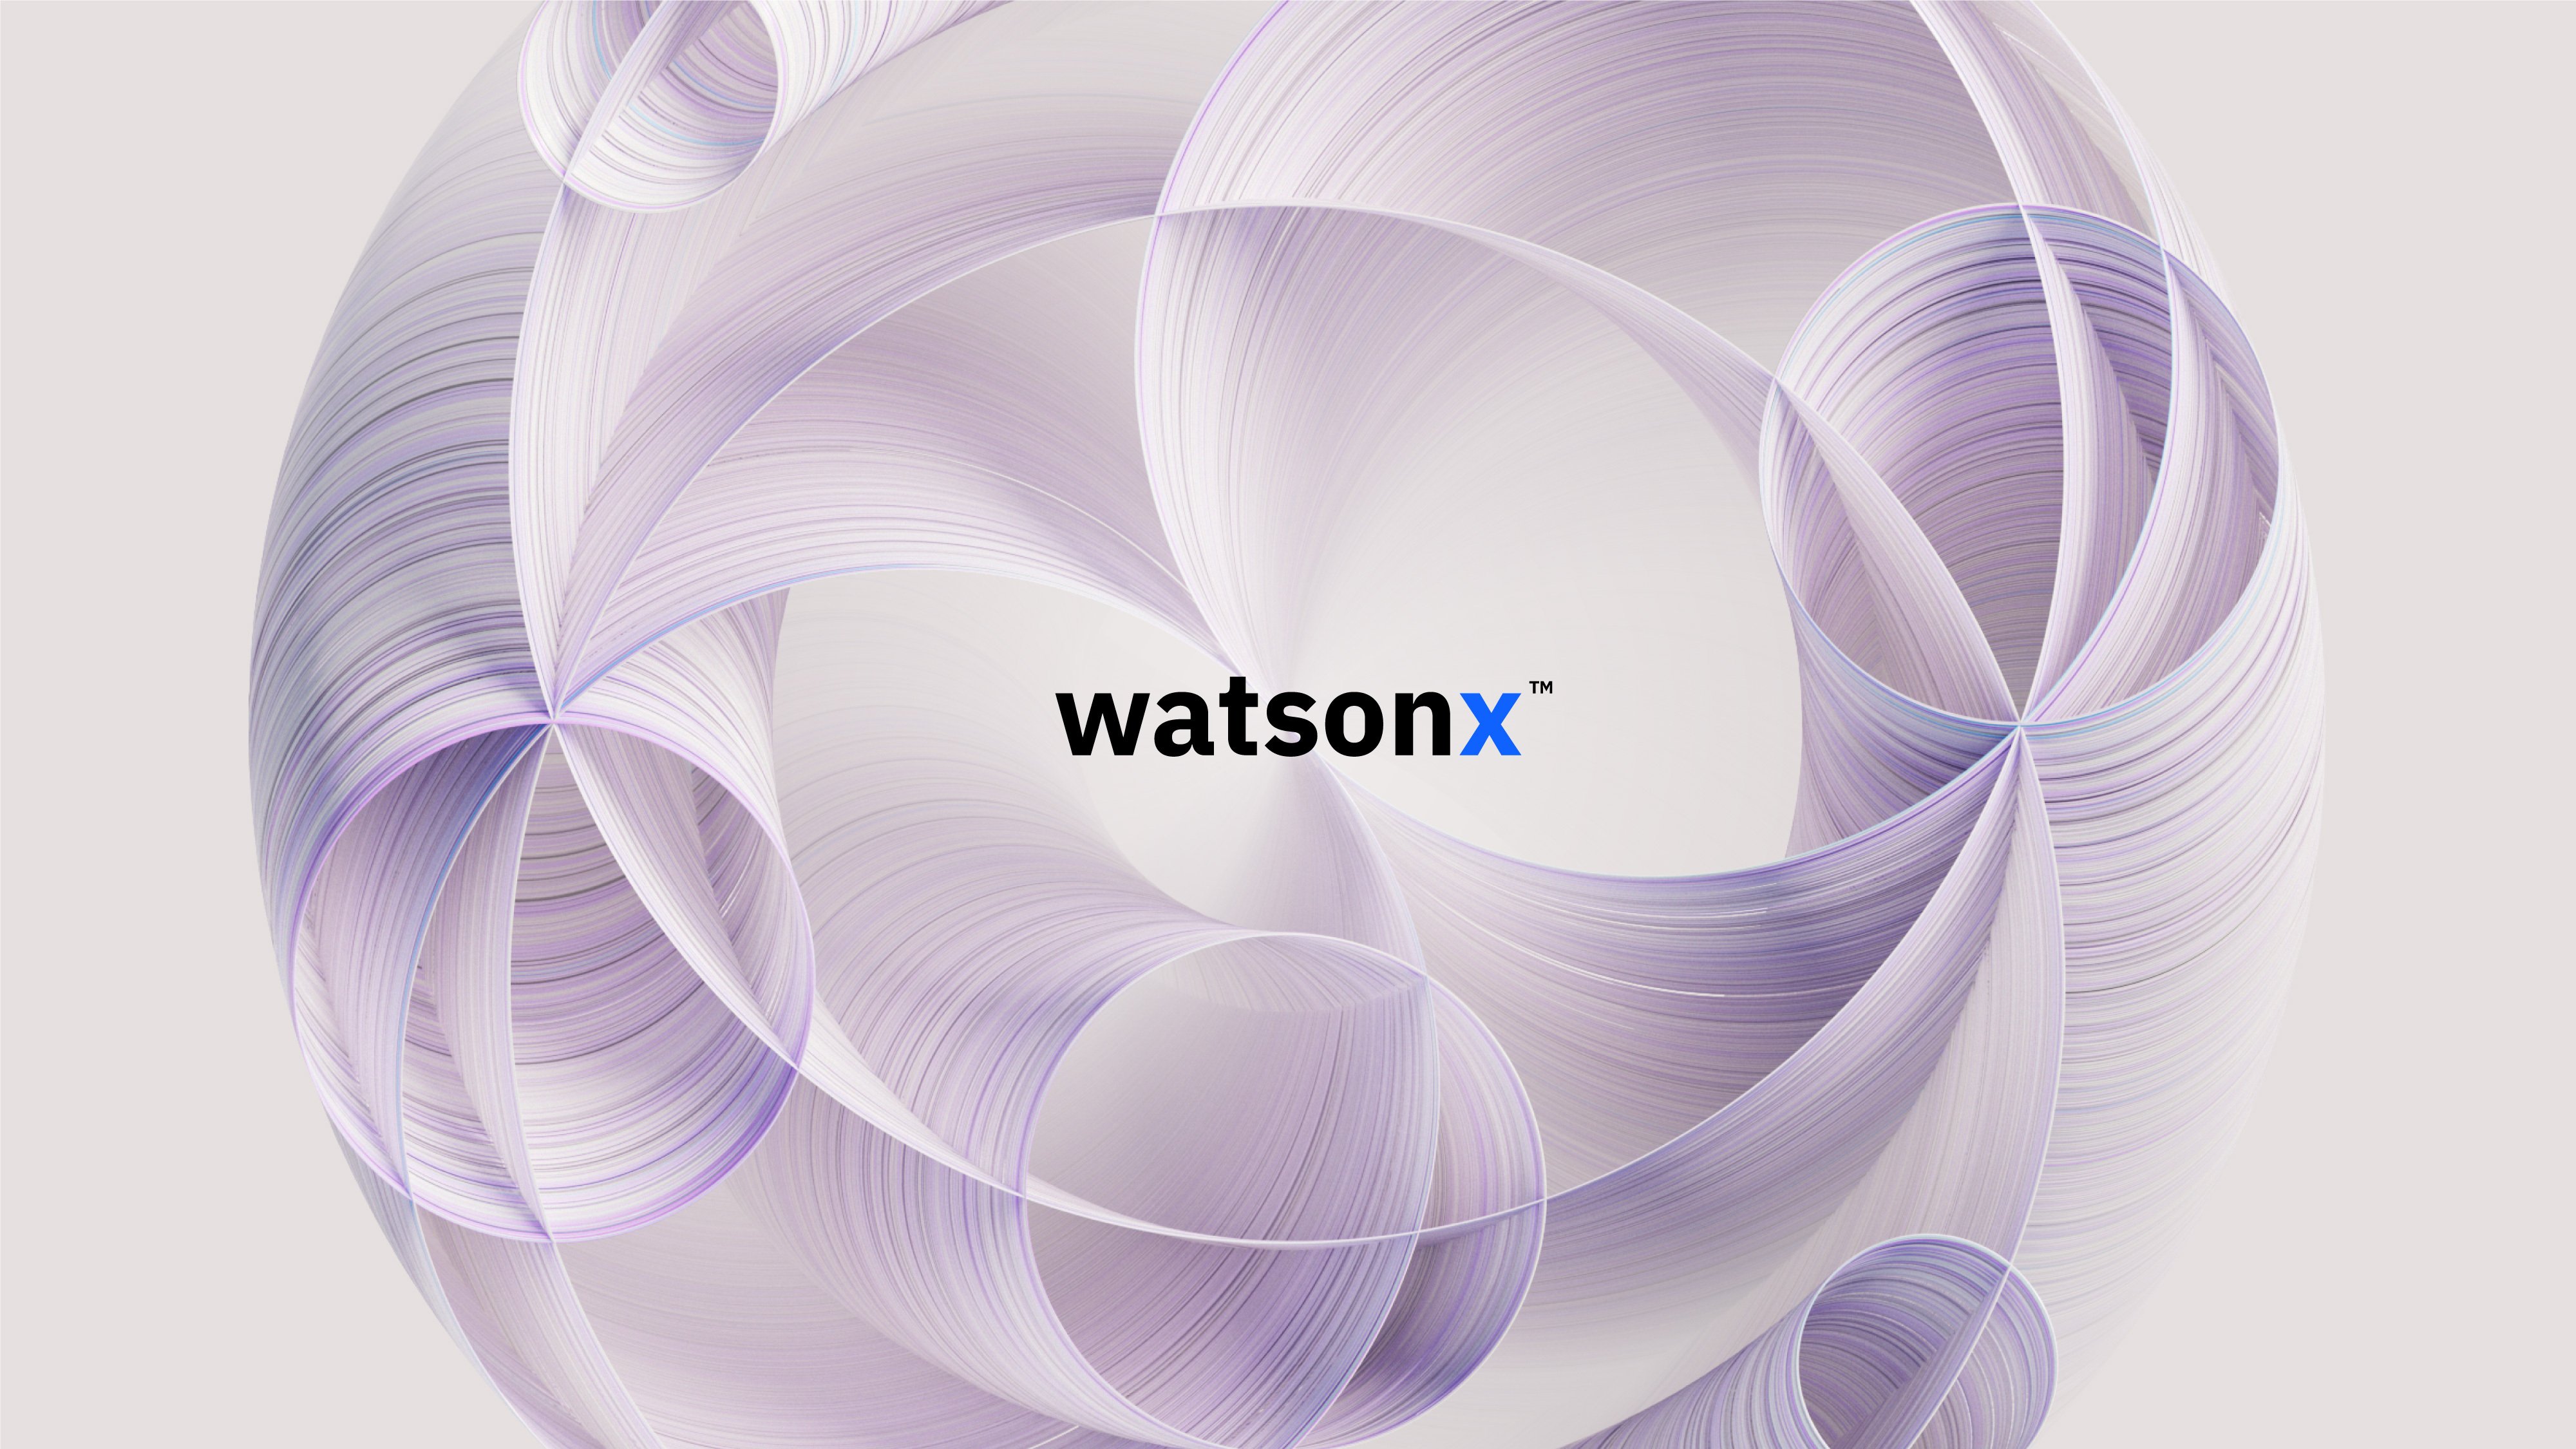 watsonx IBM